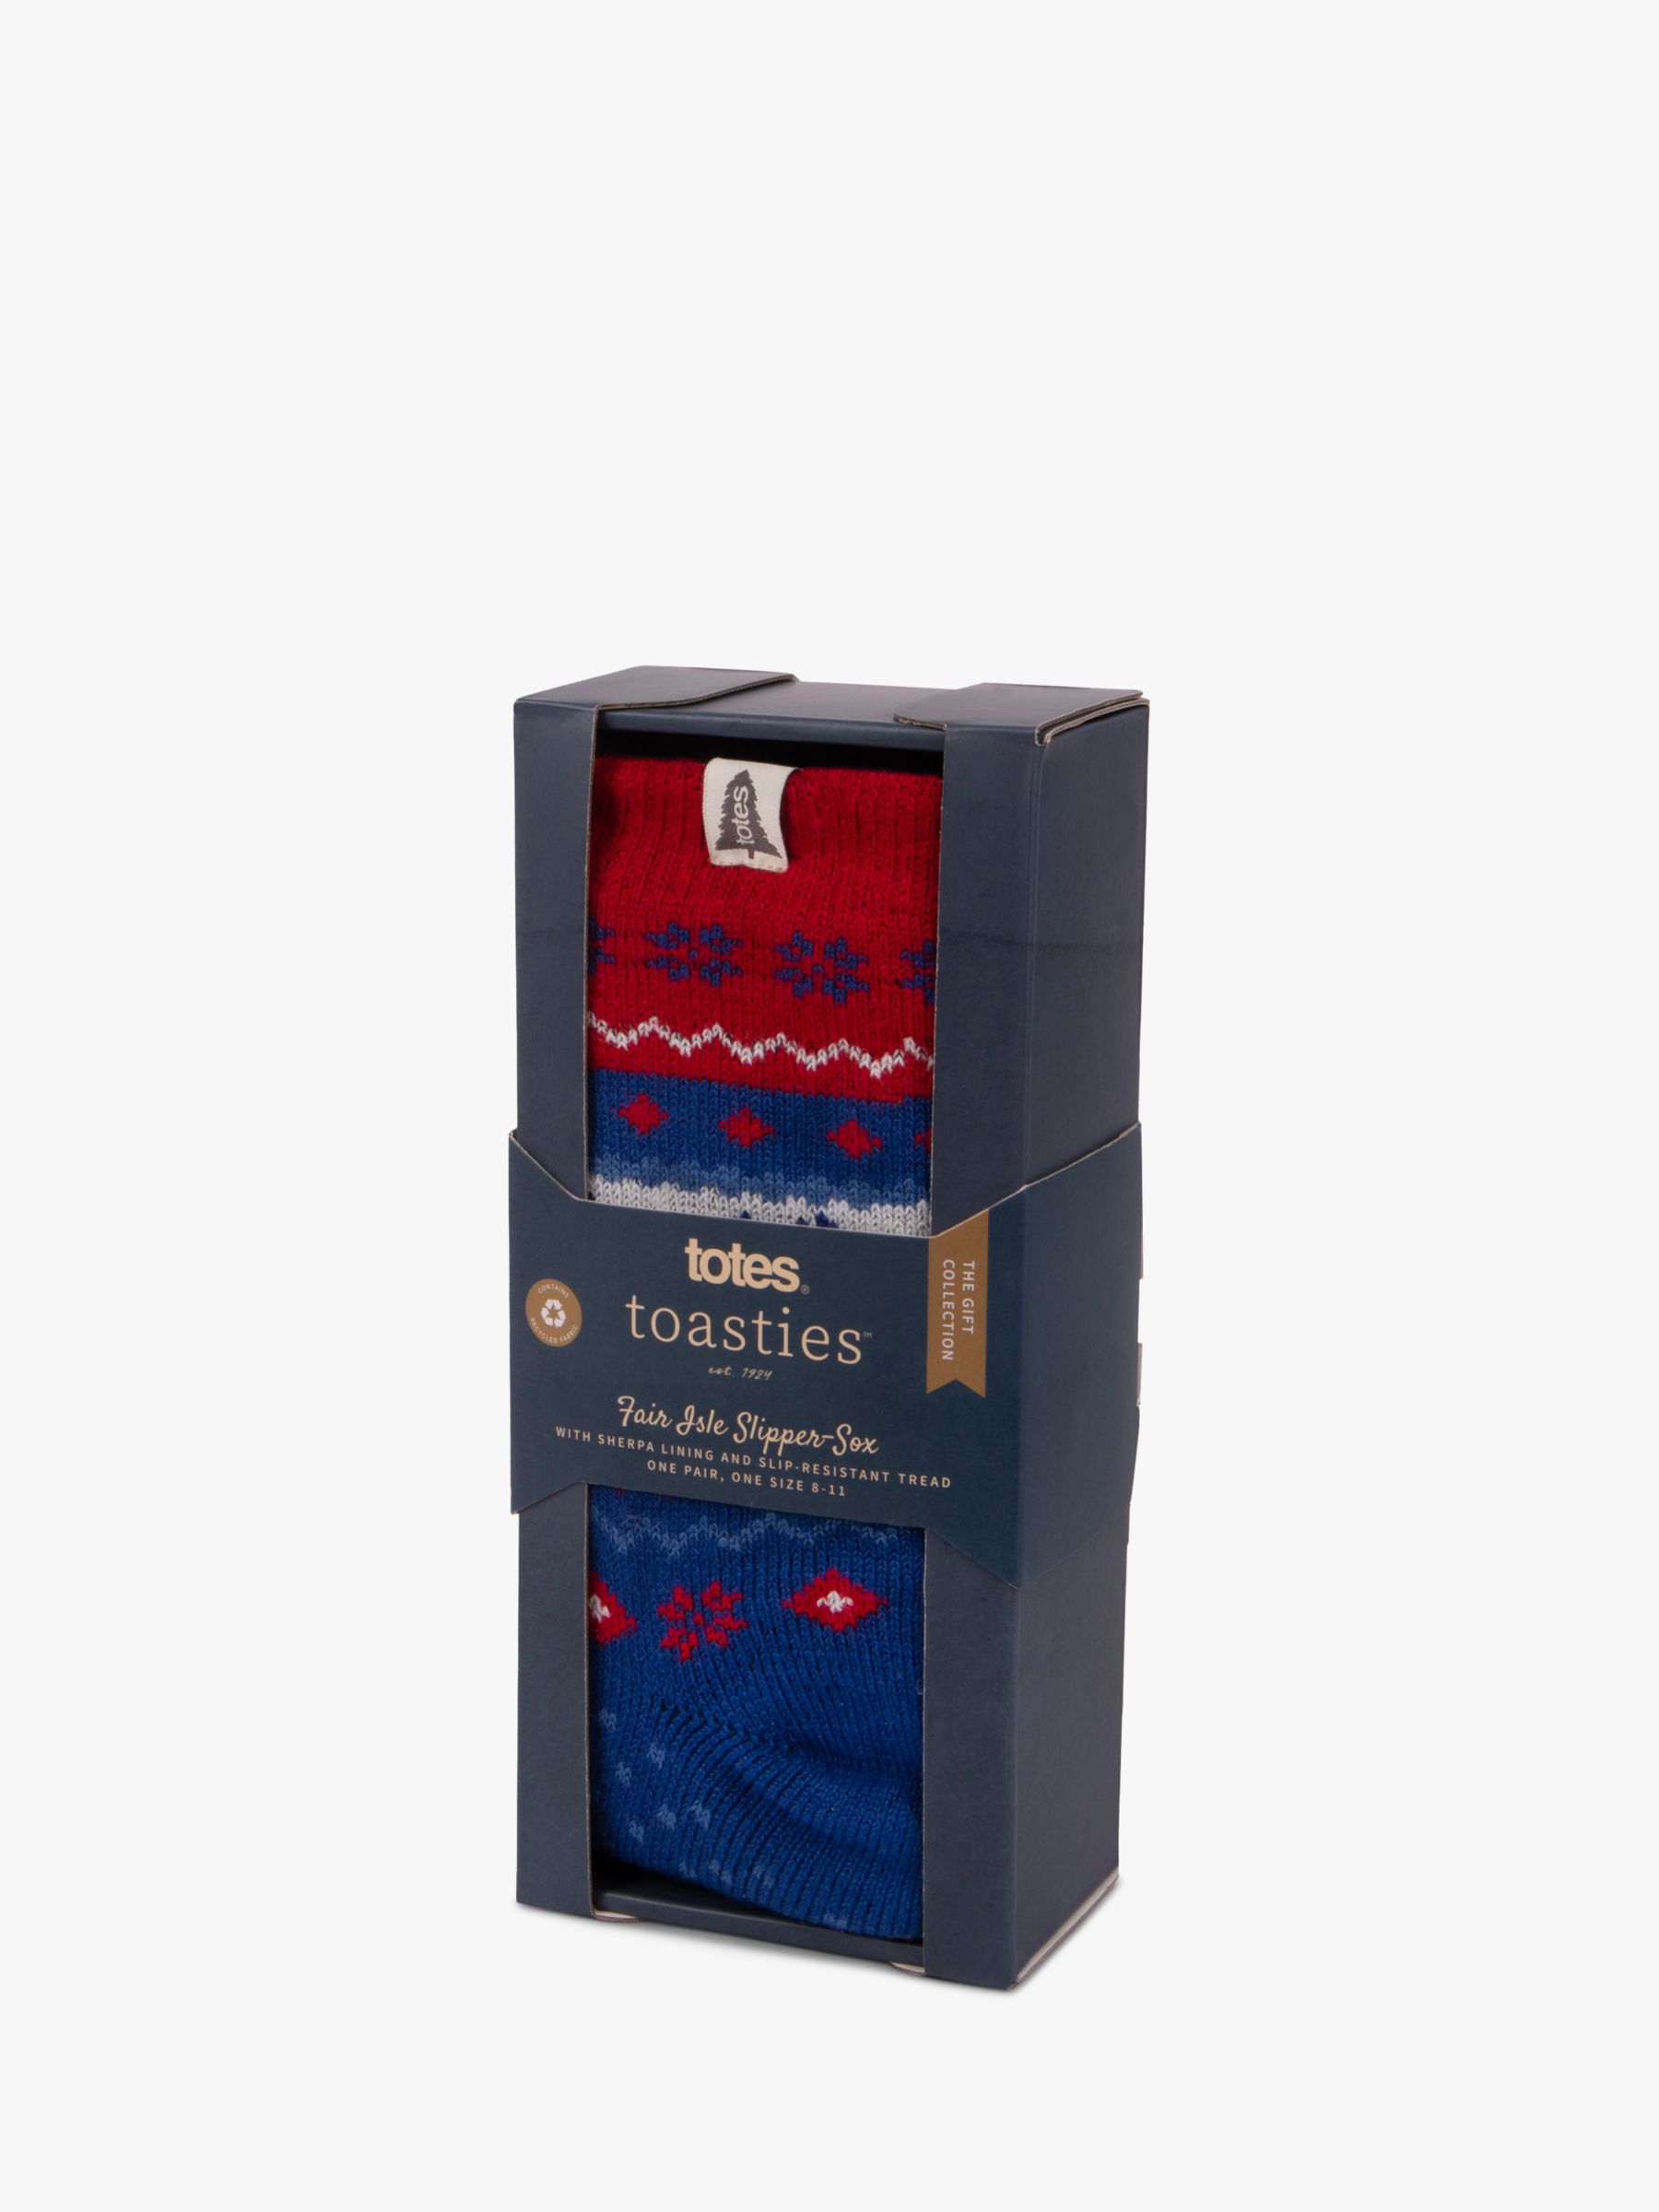 totes toasties Fair Isle Slipper Socks, Blue/Red/White, One Size